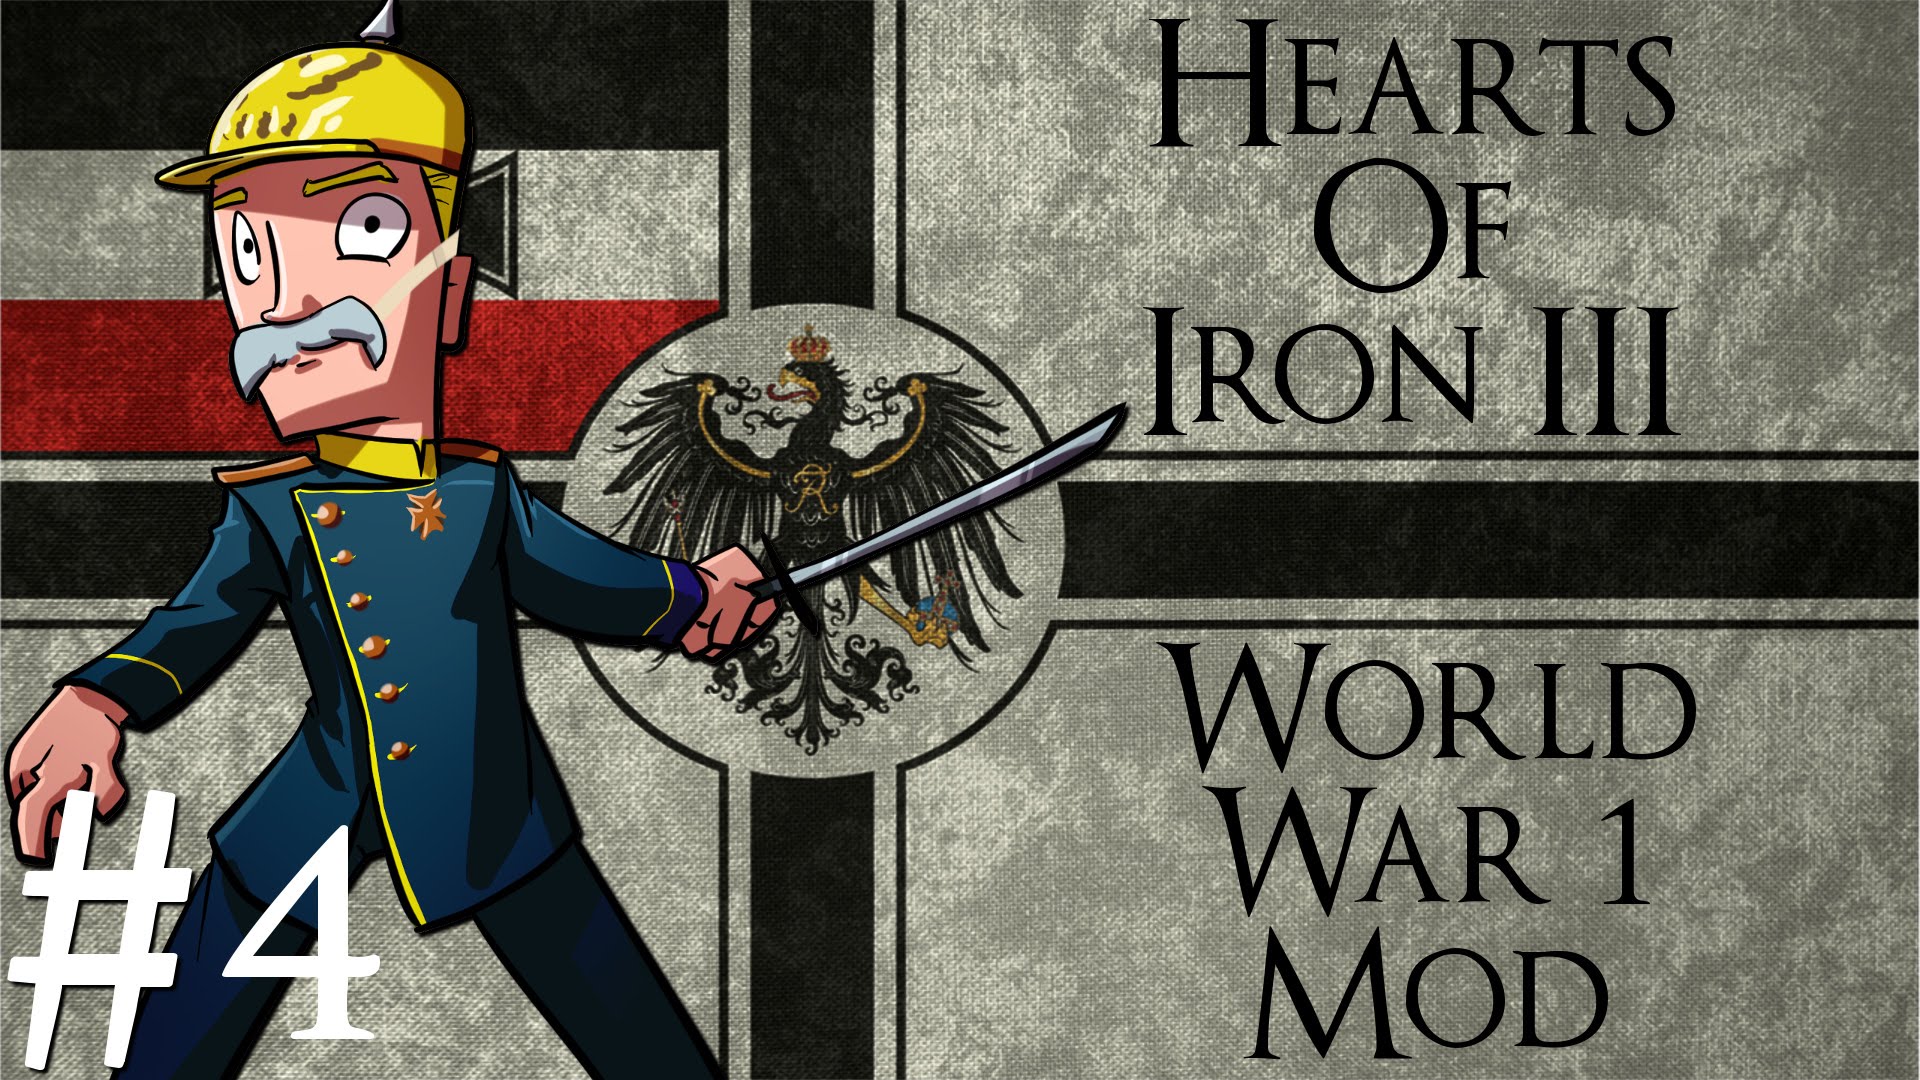 Hearts of Iron 3 | World War 1 mod | German Empire | Part 4 | End of the Ottoman Empire